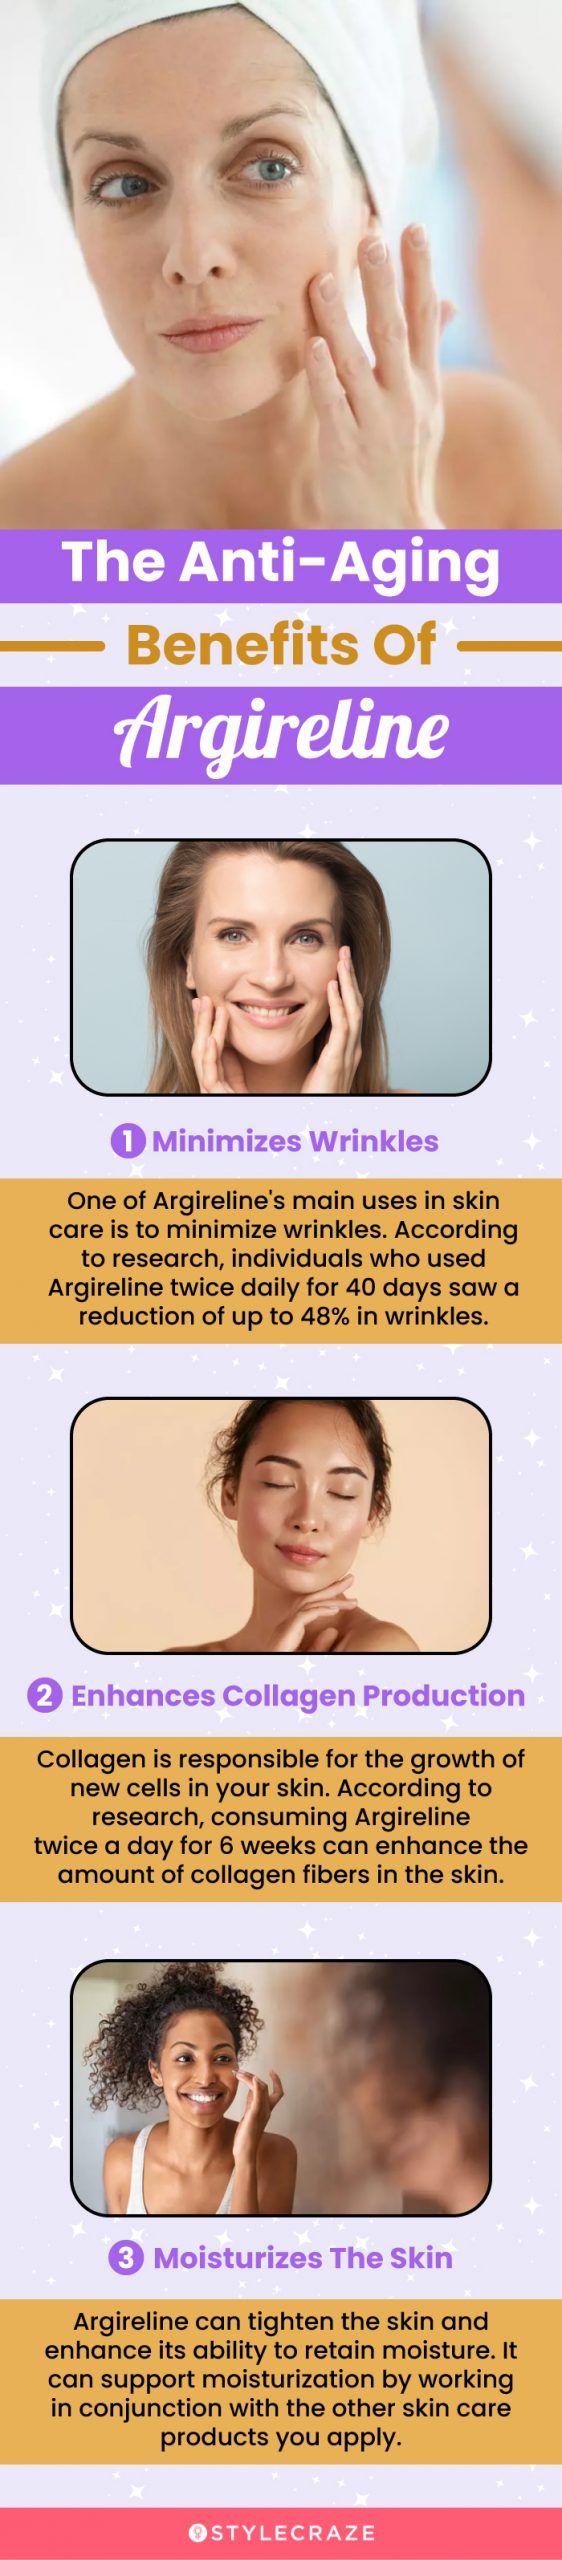 the anti aging benefits of argireline (infographic)